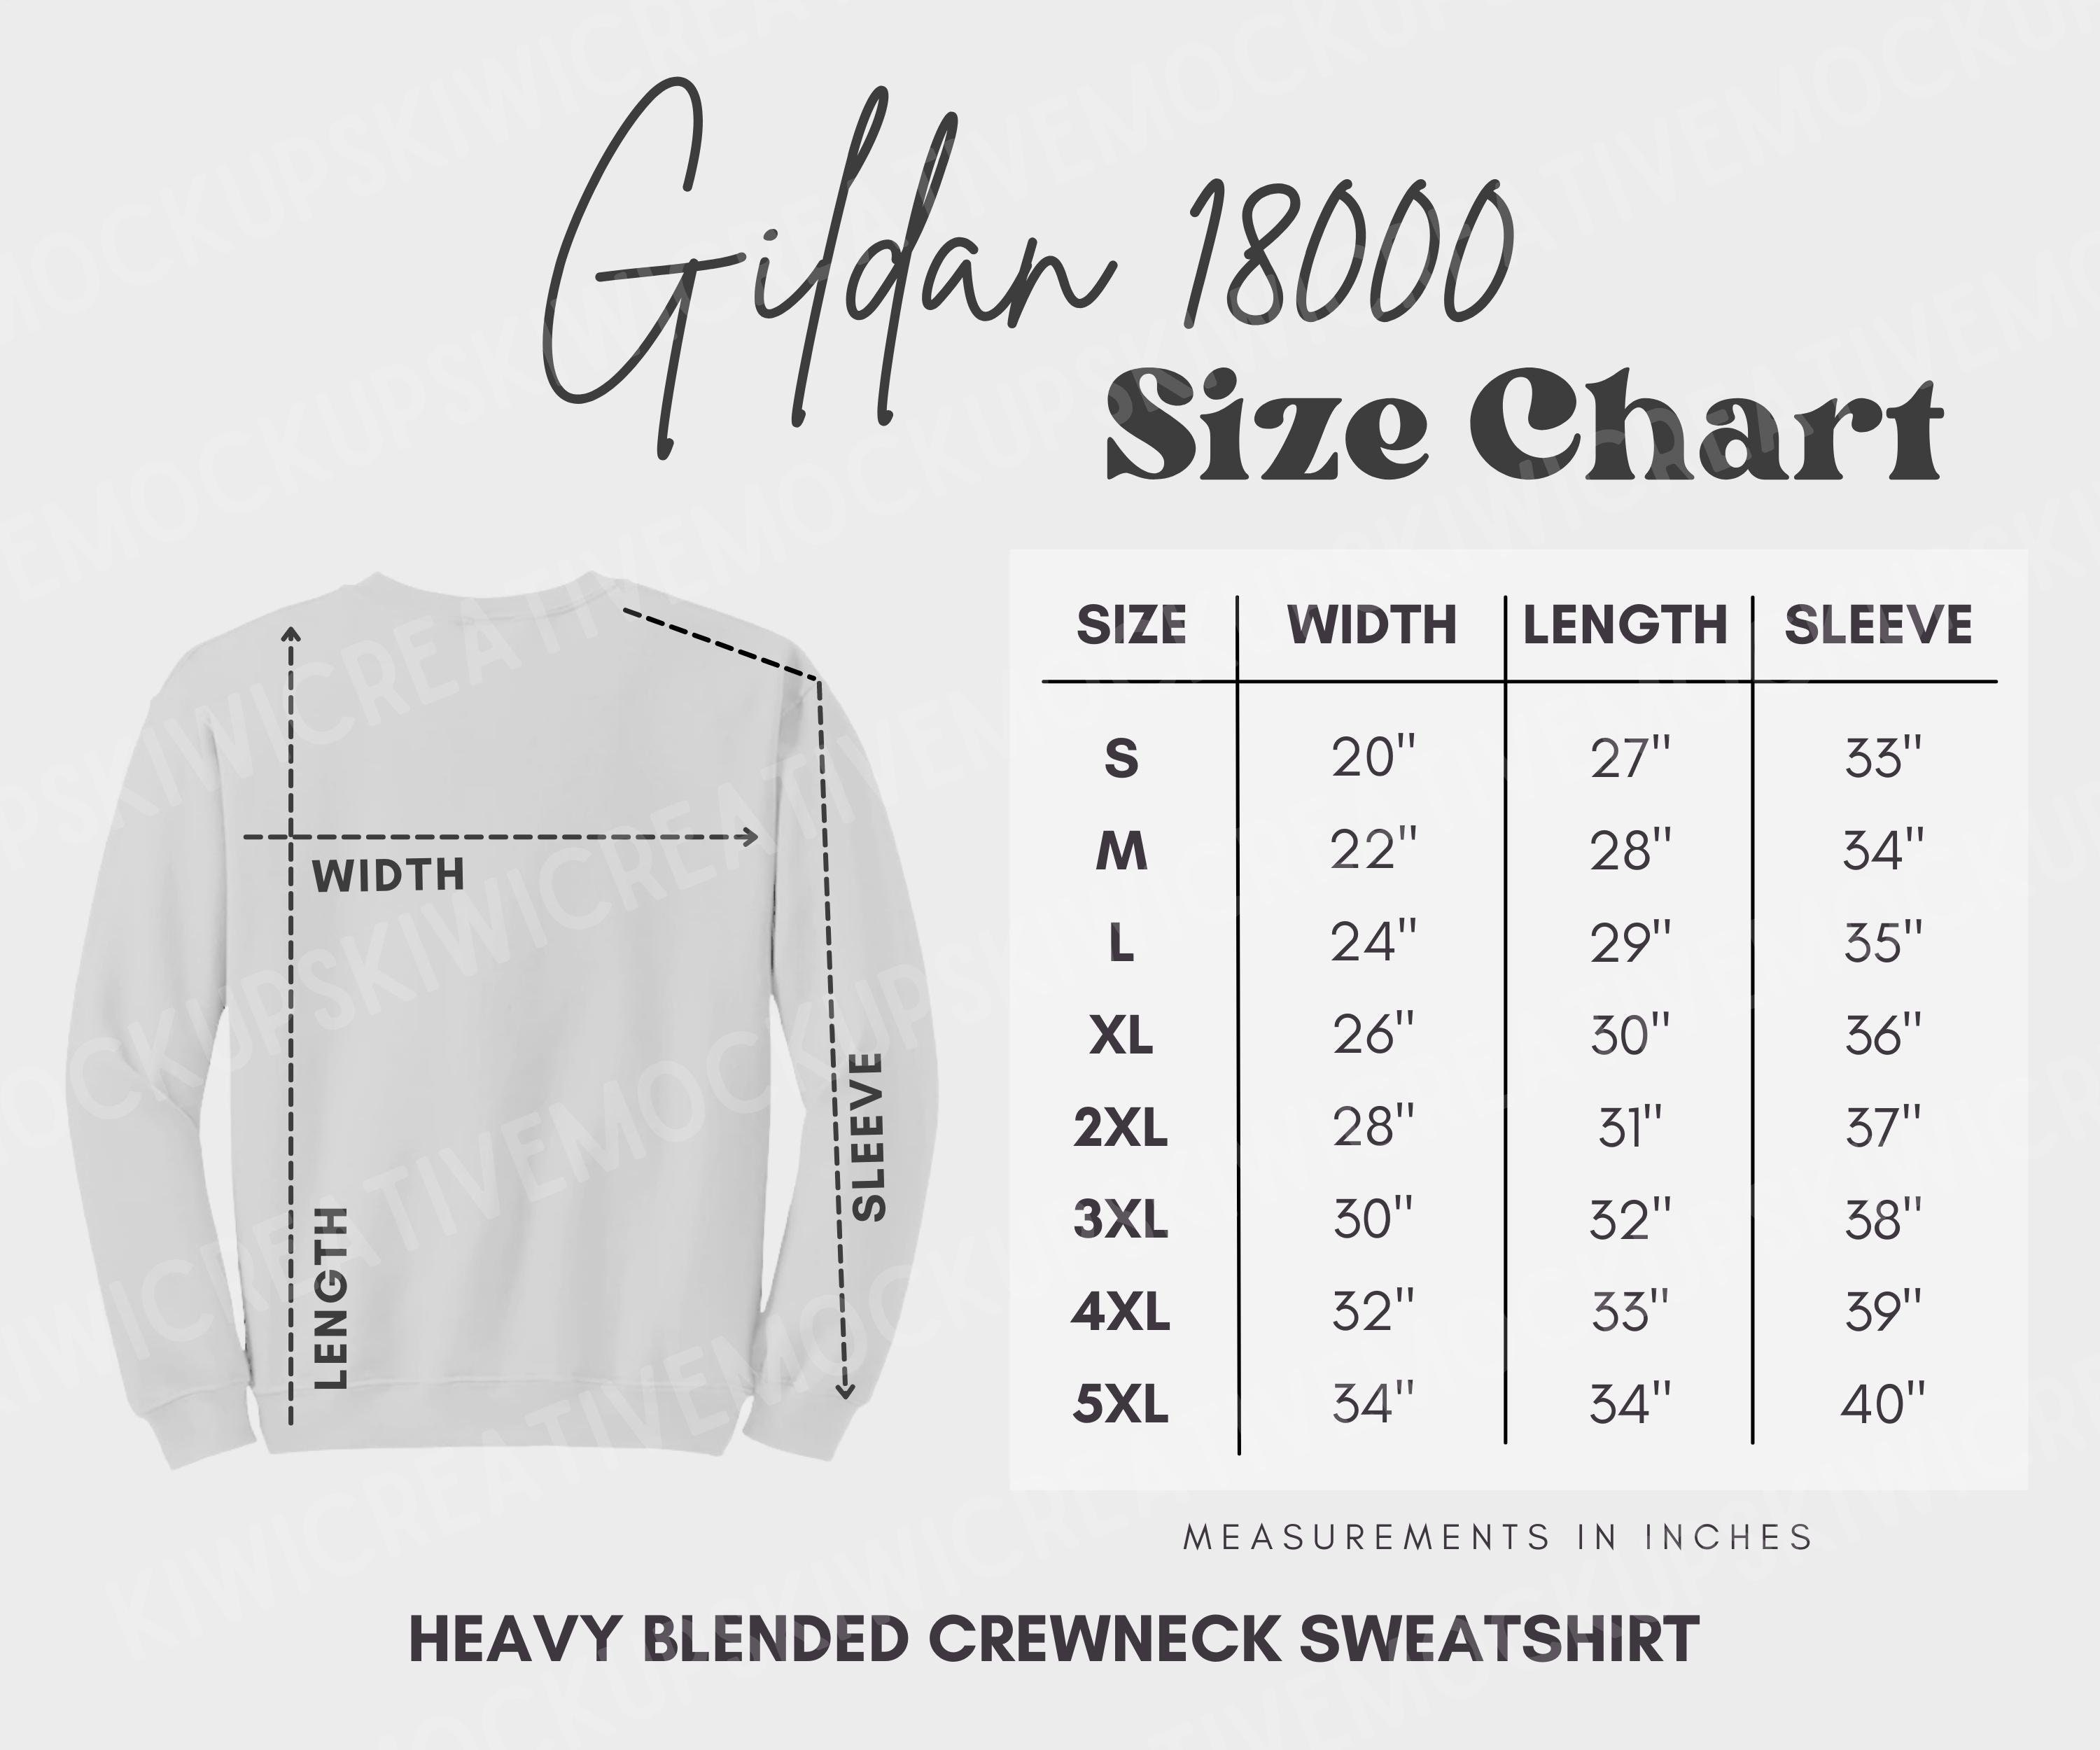 Gildan 18000 Size Chart, Heavy Blend Crewneck Sweatshirt Size Guide,  Sweatshirt Size Measurements, Downloadable Size Chart, Size Guide Mocks 